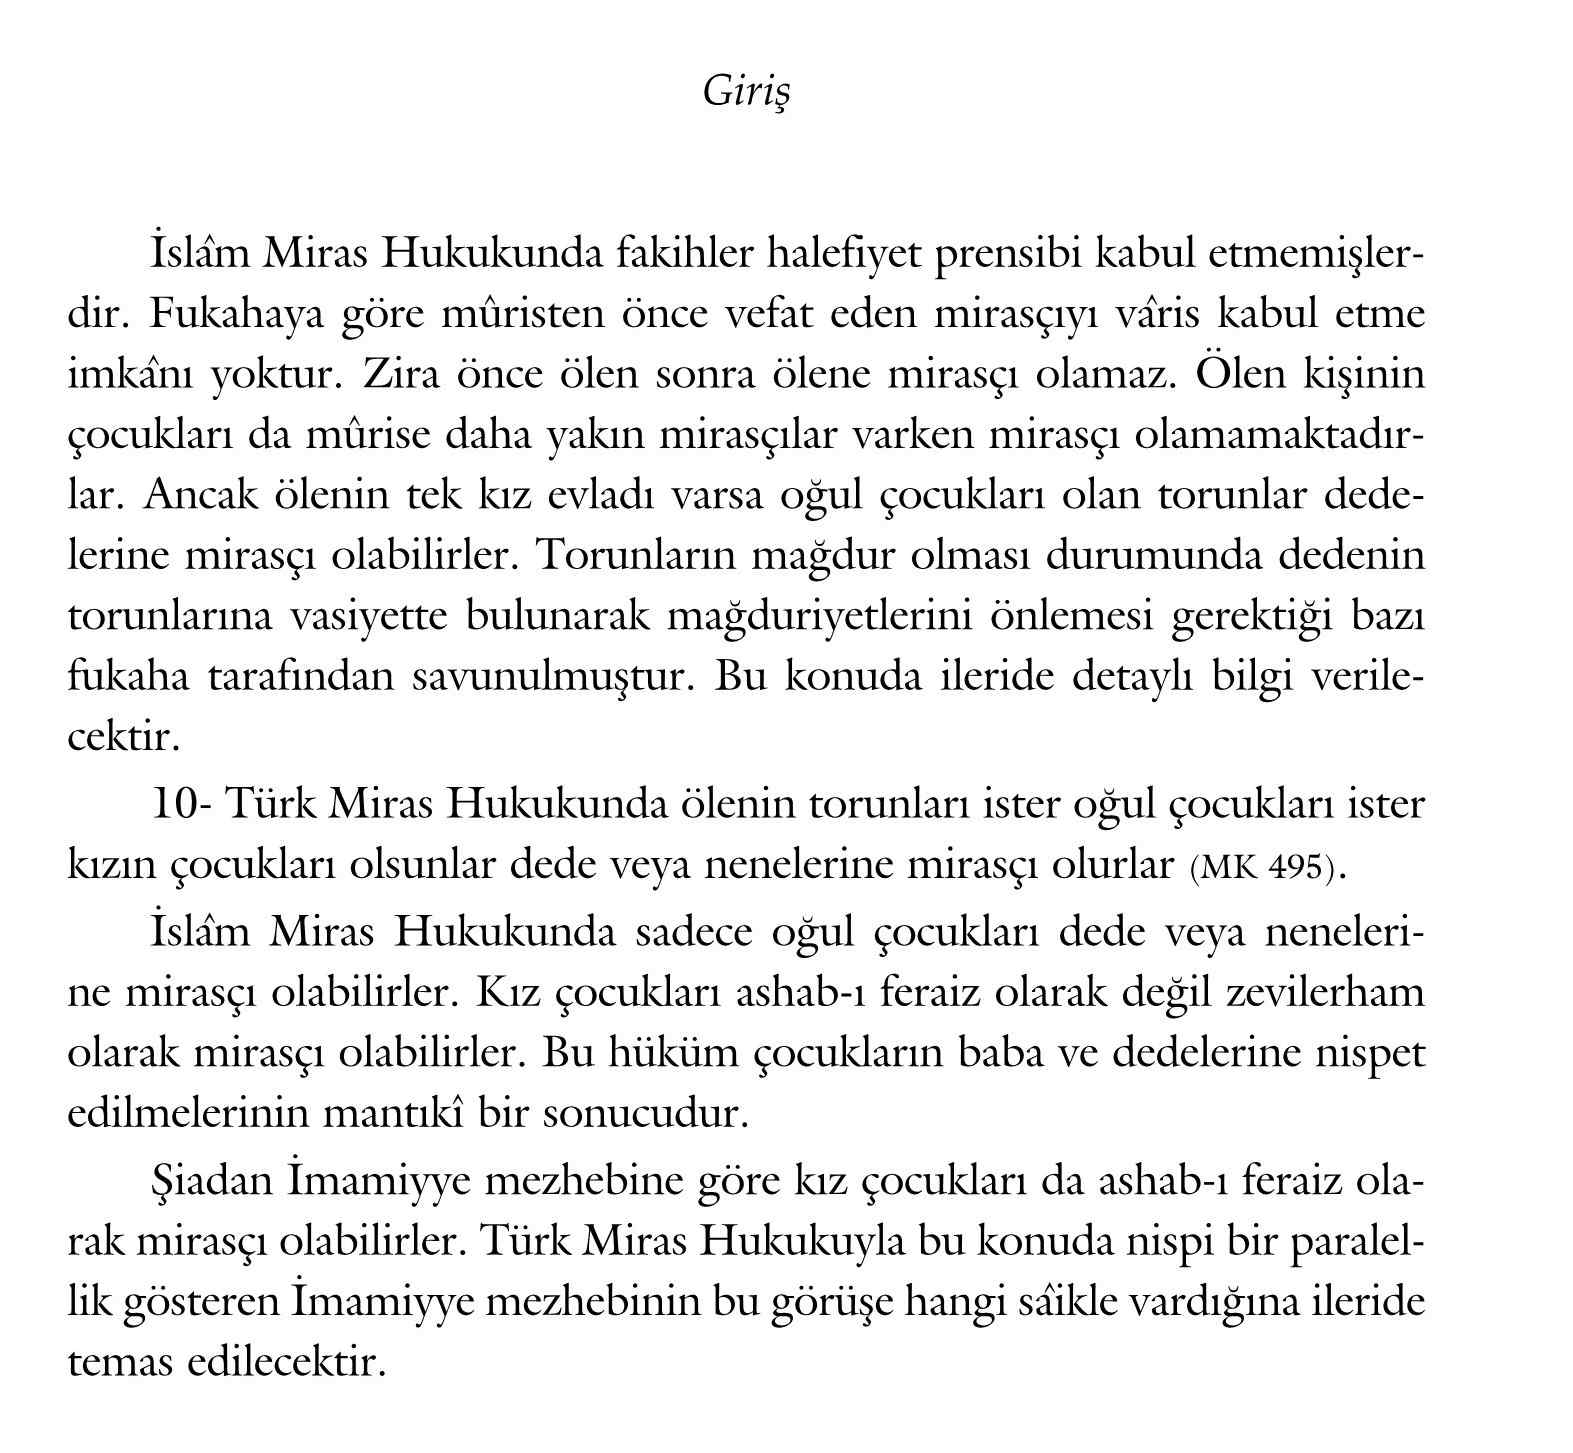 Hamza Aktan - Mukayeseli Islam Miras Hukuku - IsikAkademiY.pdf, 302-Sayfa 